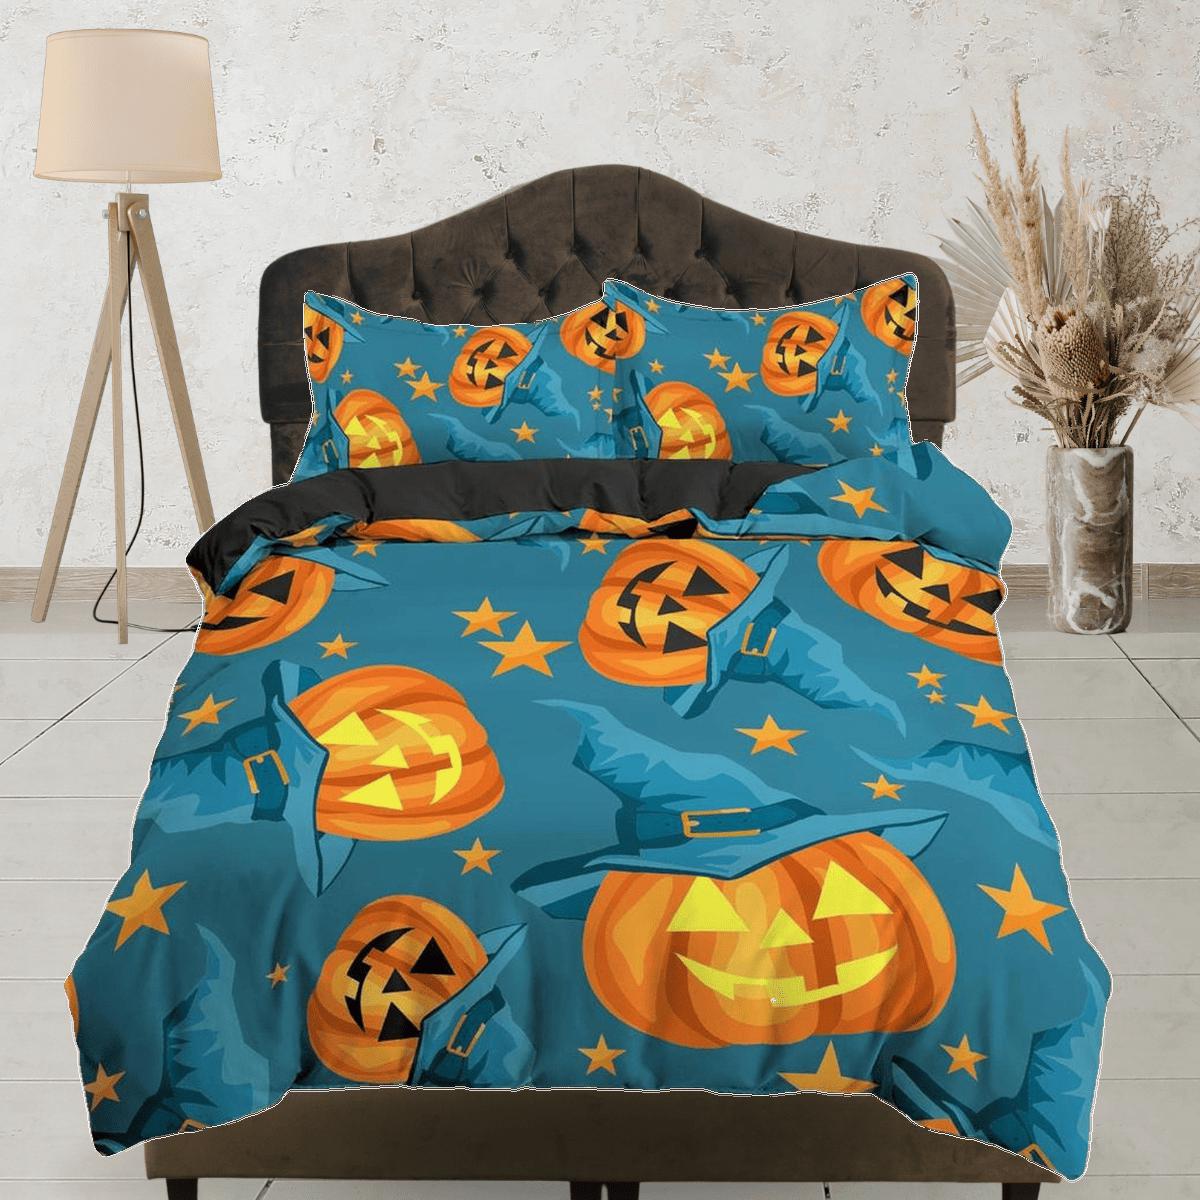 daintyduvet Witchy pumpkin halloween full size bedding & pillowcase, sea green duvet cover set dorm bedding, nursery toddler bedding, halloween gift